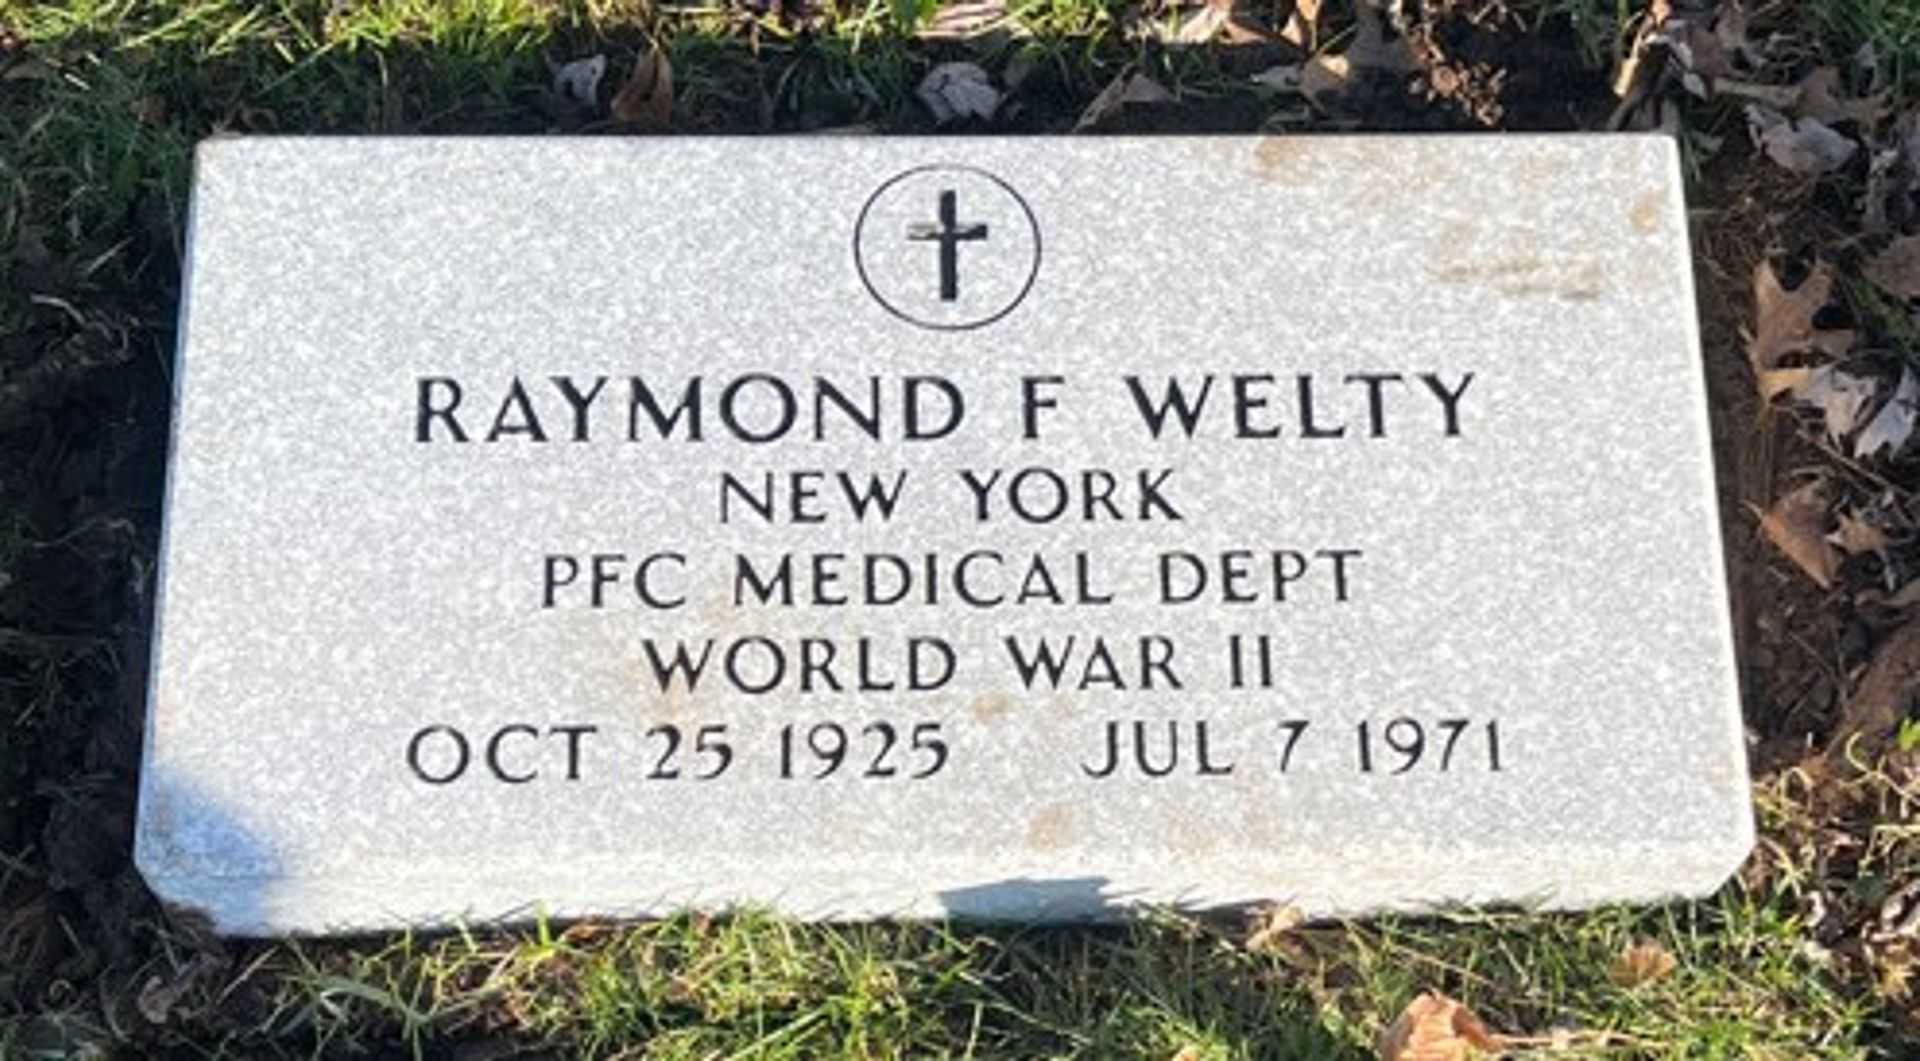 Raymond F. Welty's grave. Photo 1